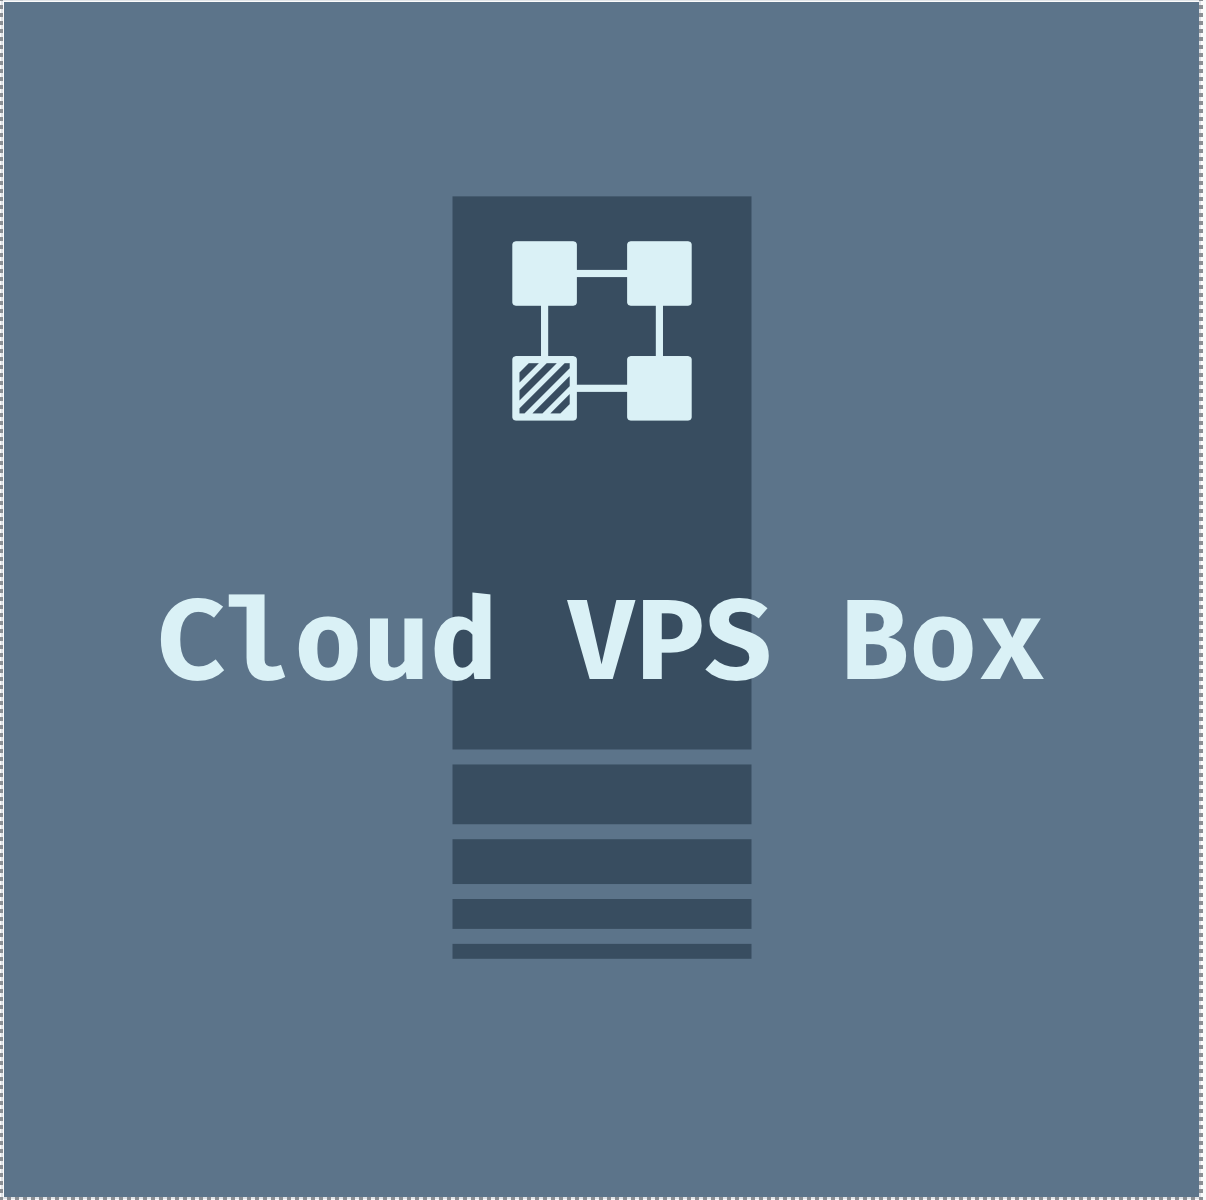 CloudVPSbox